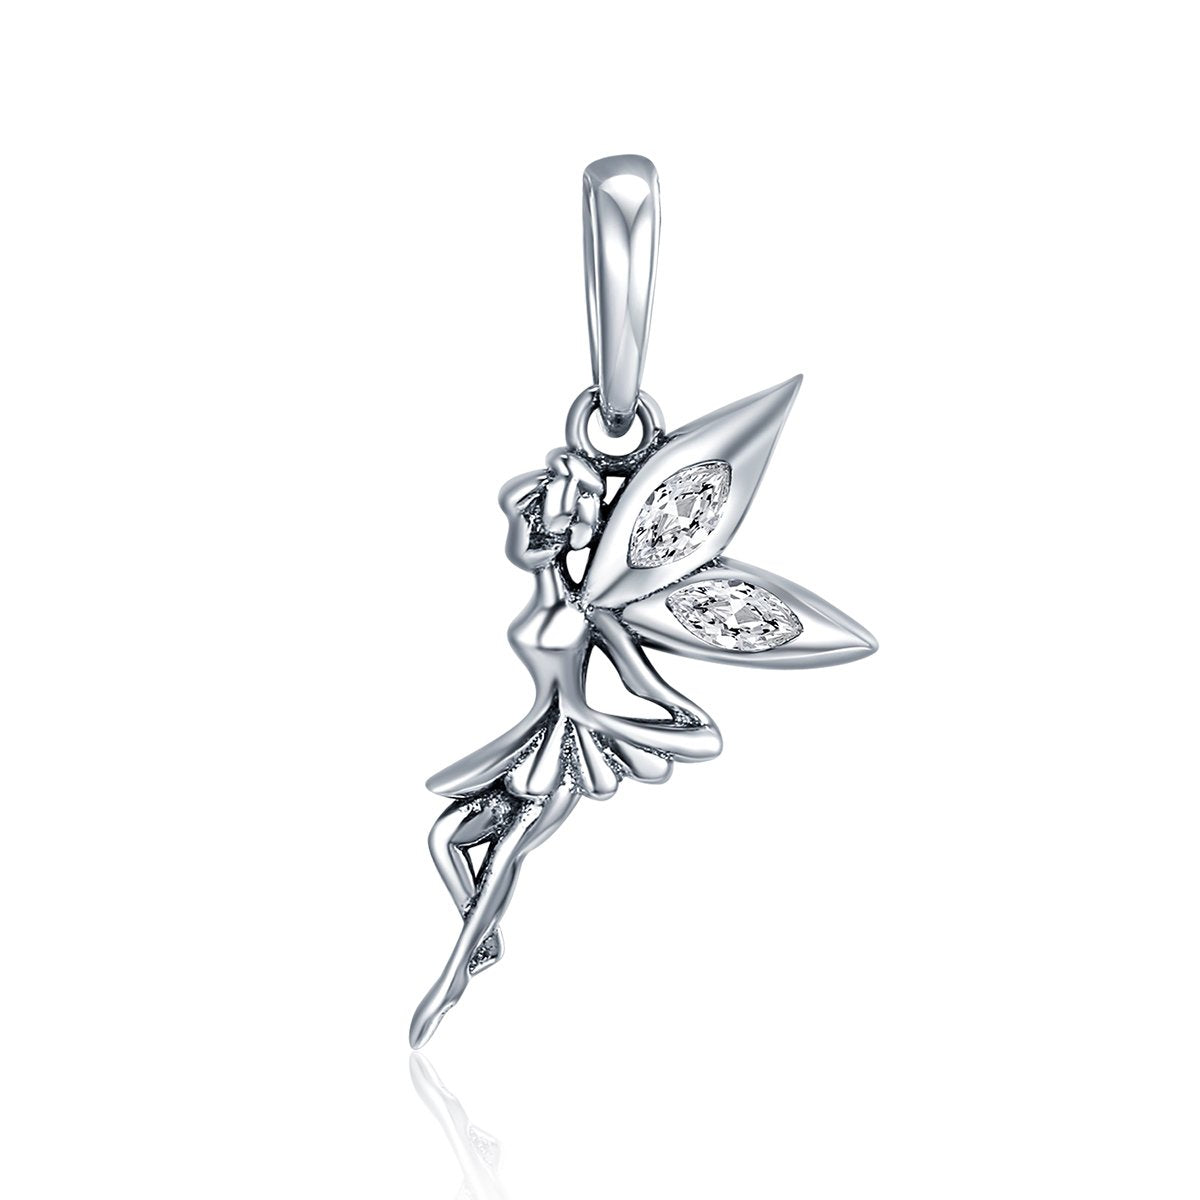 Sterling 925 silver charm the fairy bead pendant fits Pandora charm and European charm bracelet Xaxe.com